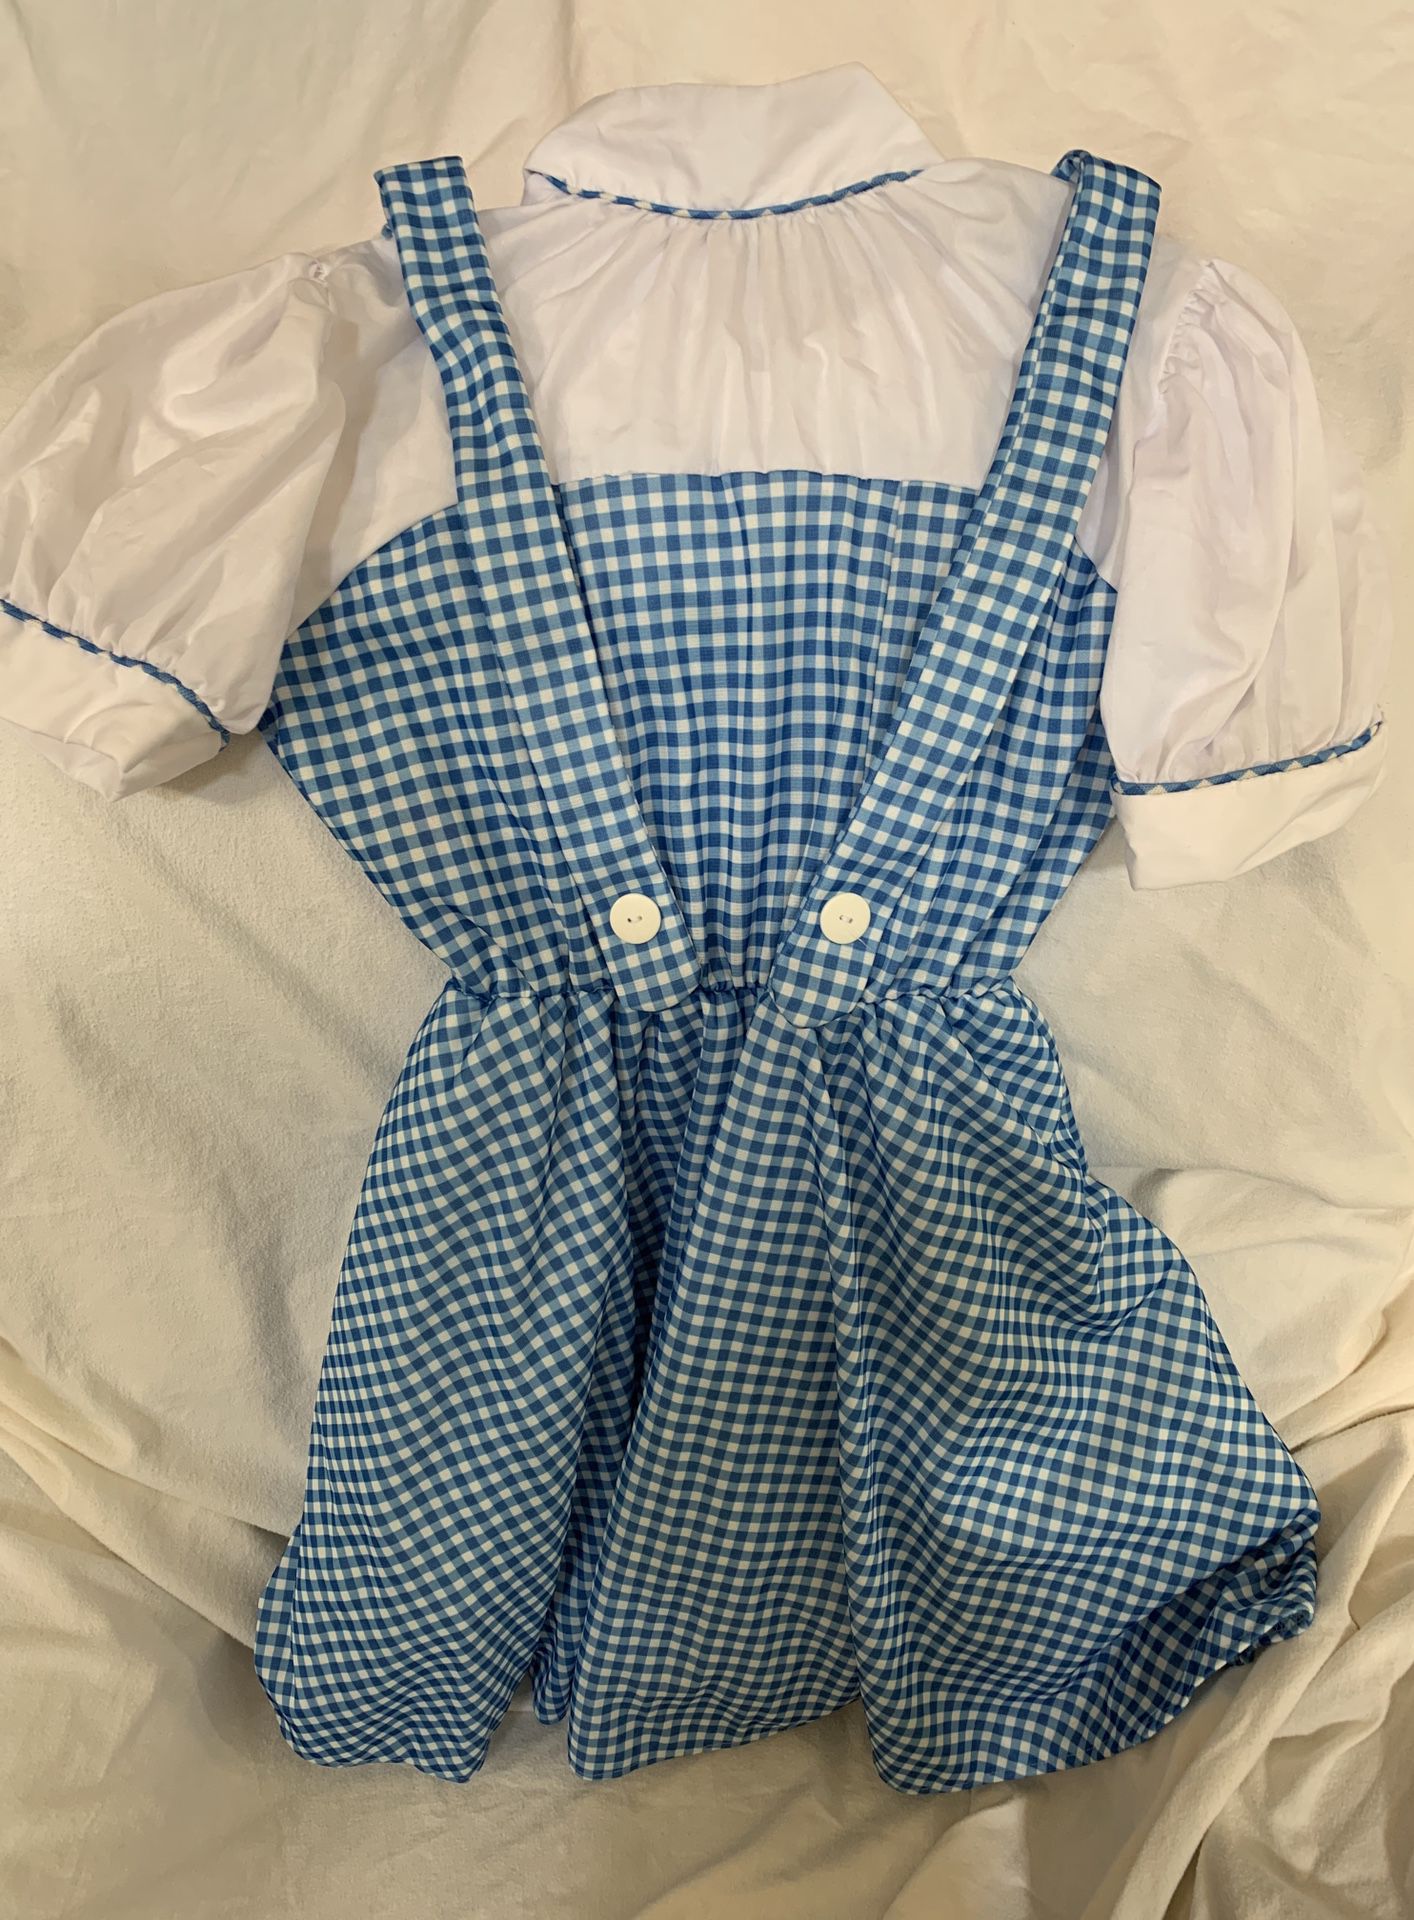 Dorothy Costume (Kids Large)